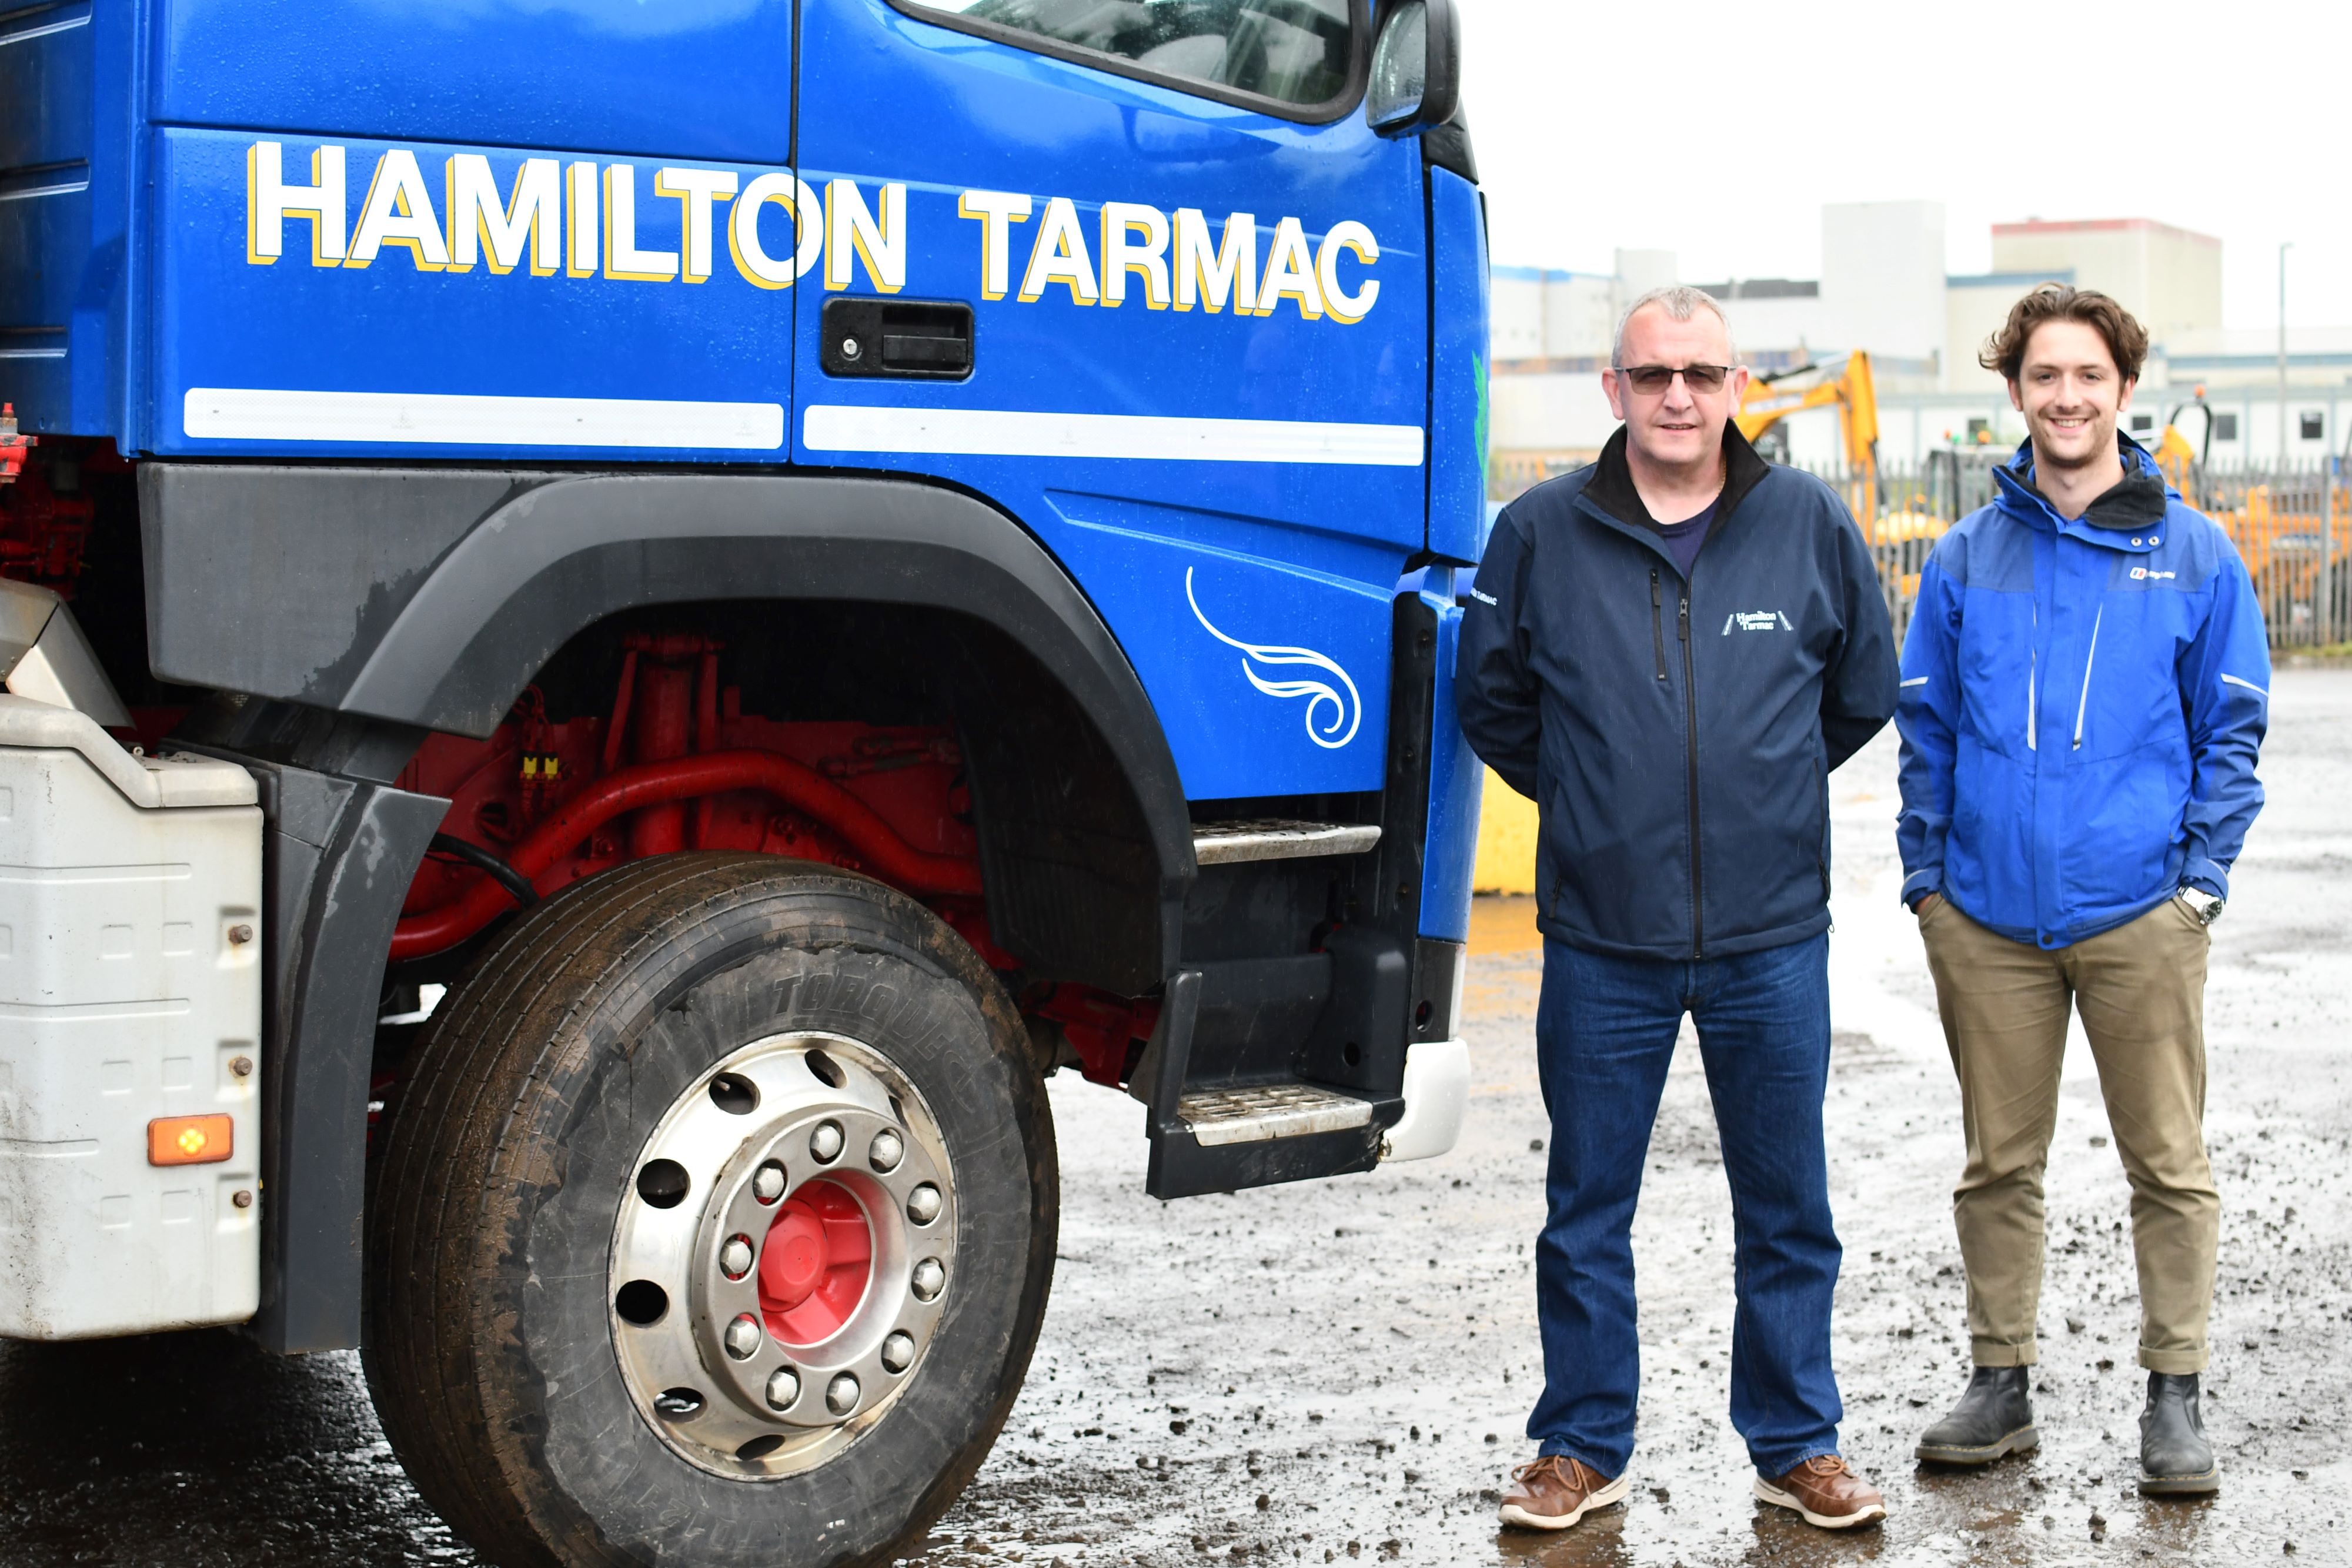 Hamilton Tarmac paves the way for UK’s tallest turbines